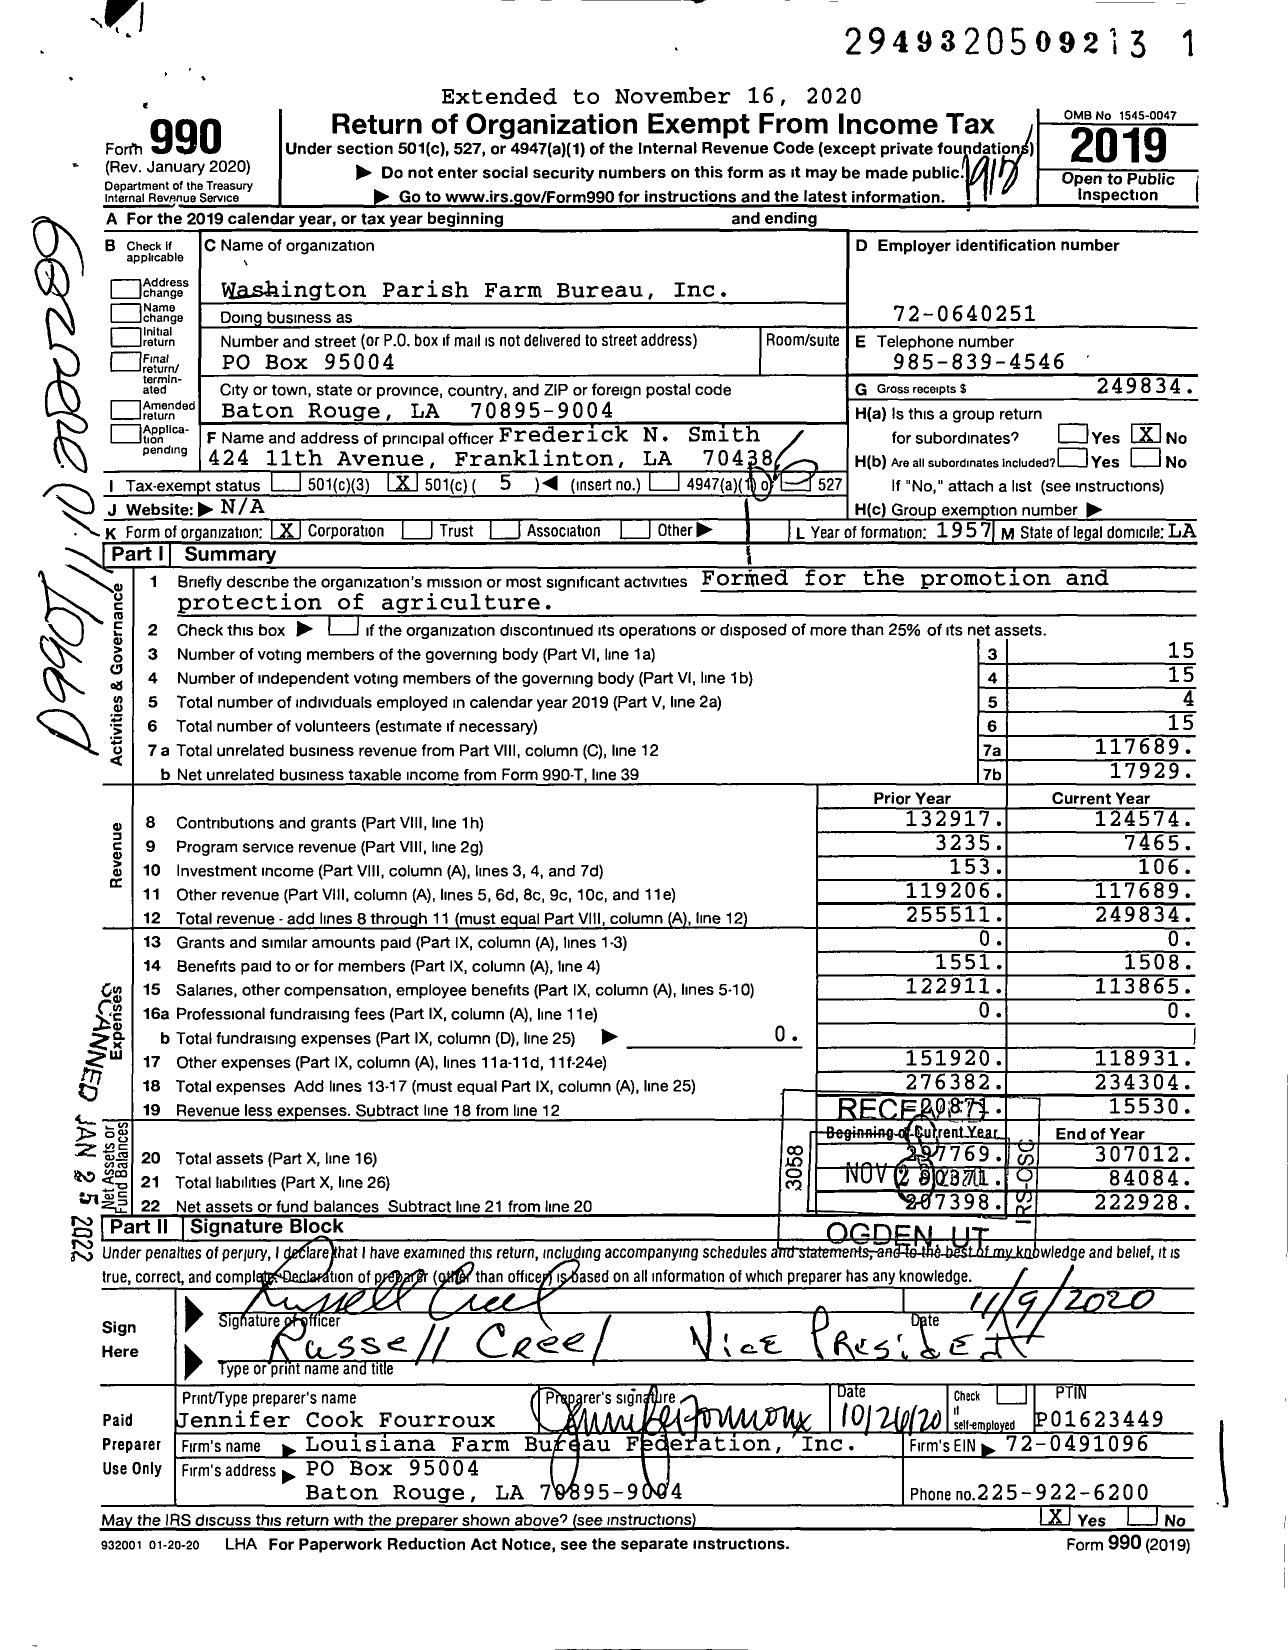 Image of first page of 2019 Form 990O for Washington Parish Farm Bureau